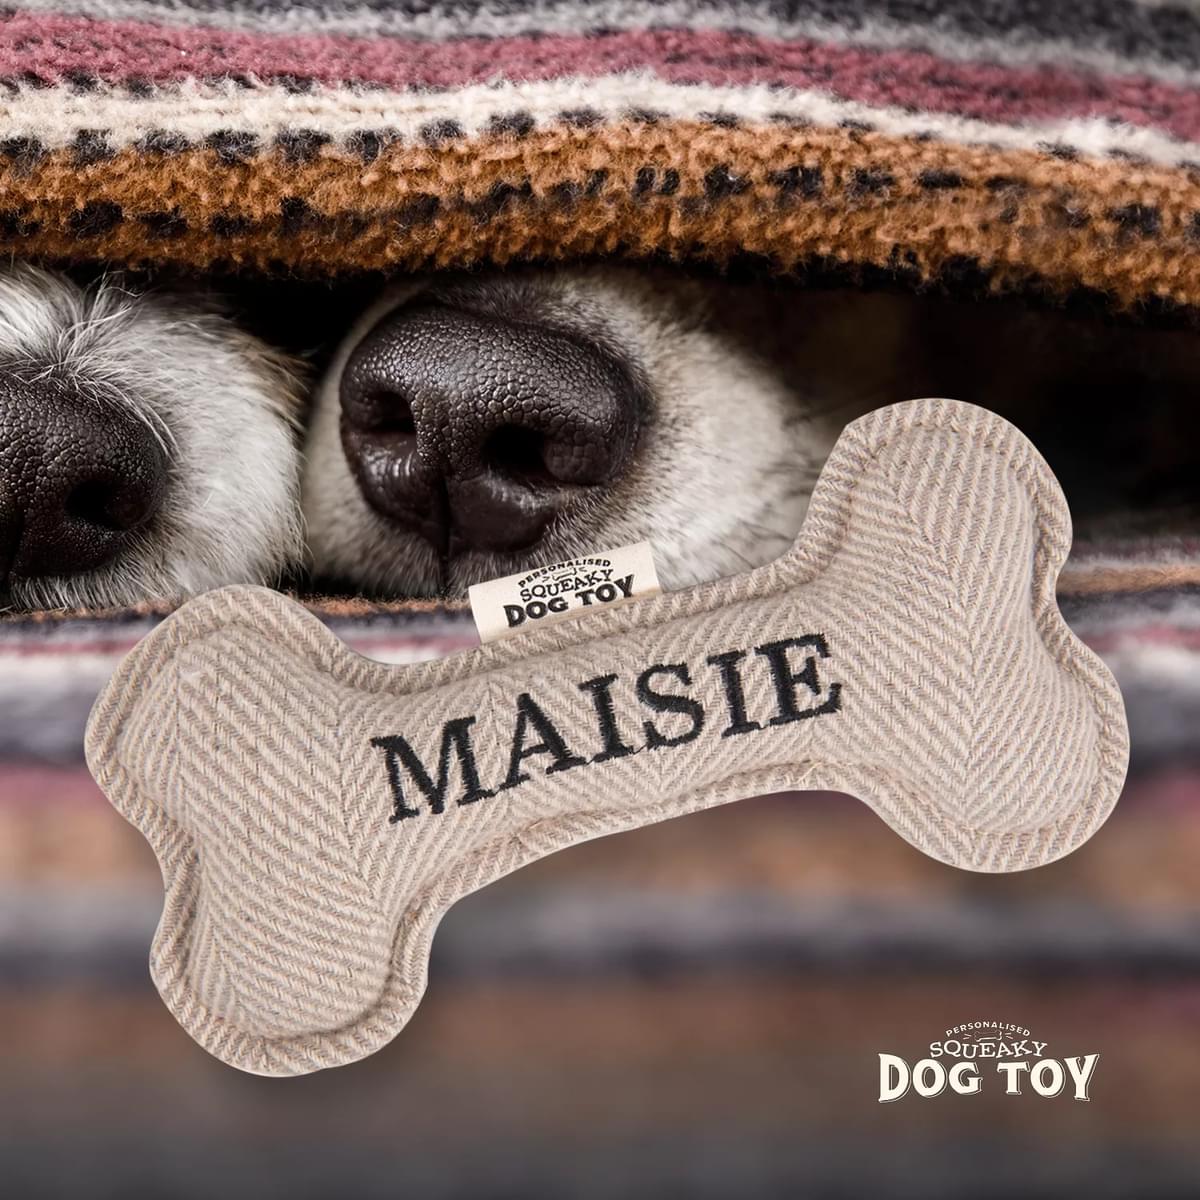 Named Squeaky Dog Toy- Maisie. Bone shaped herringbone tweed pattern dog toy. 